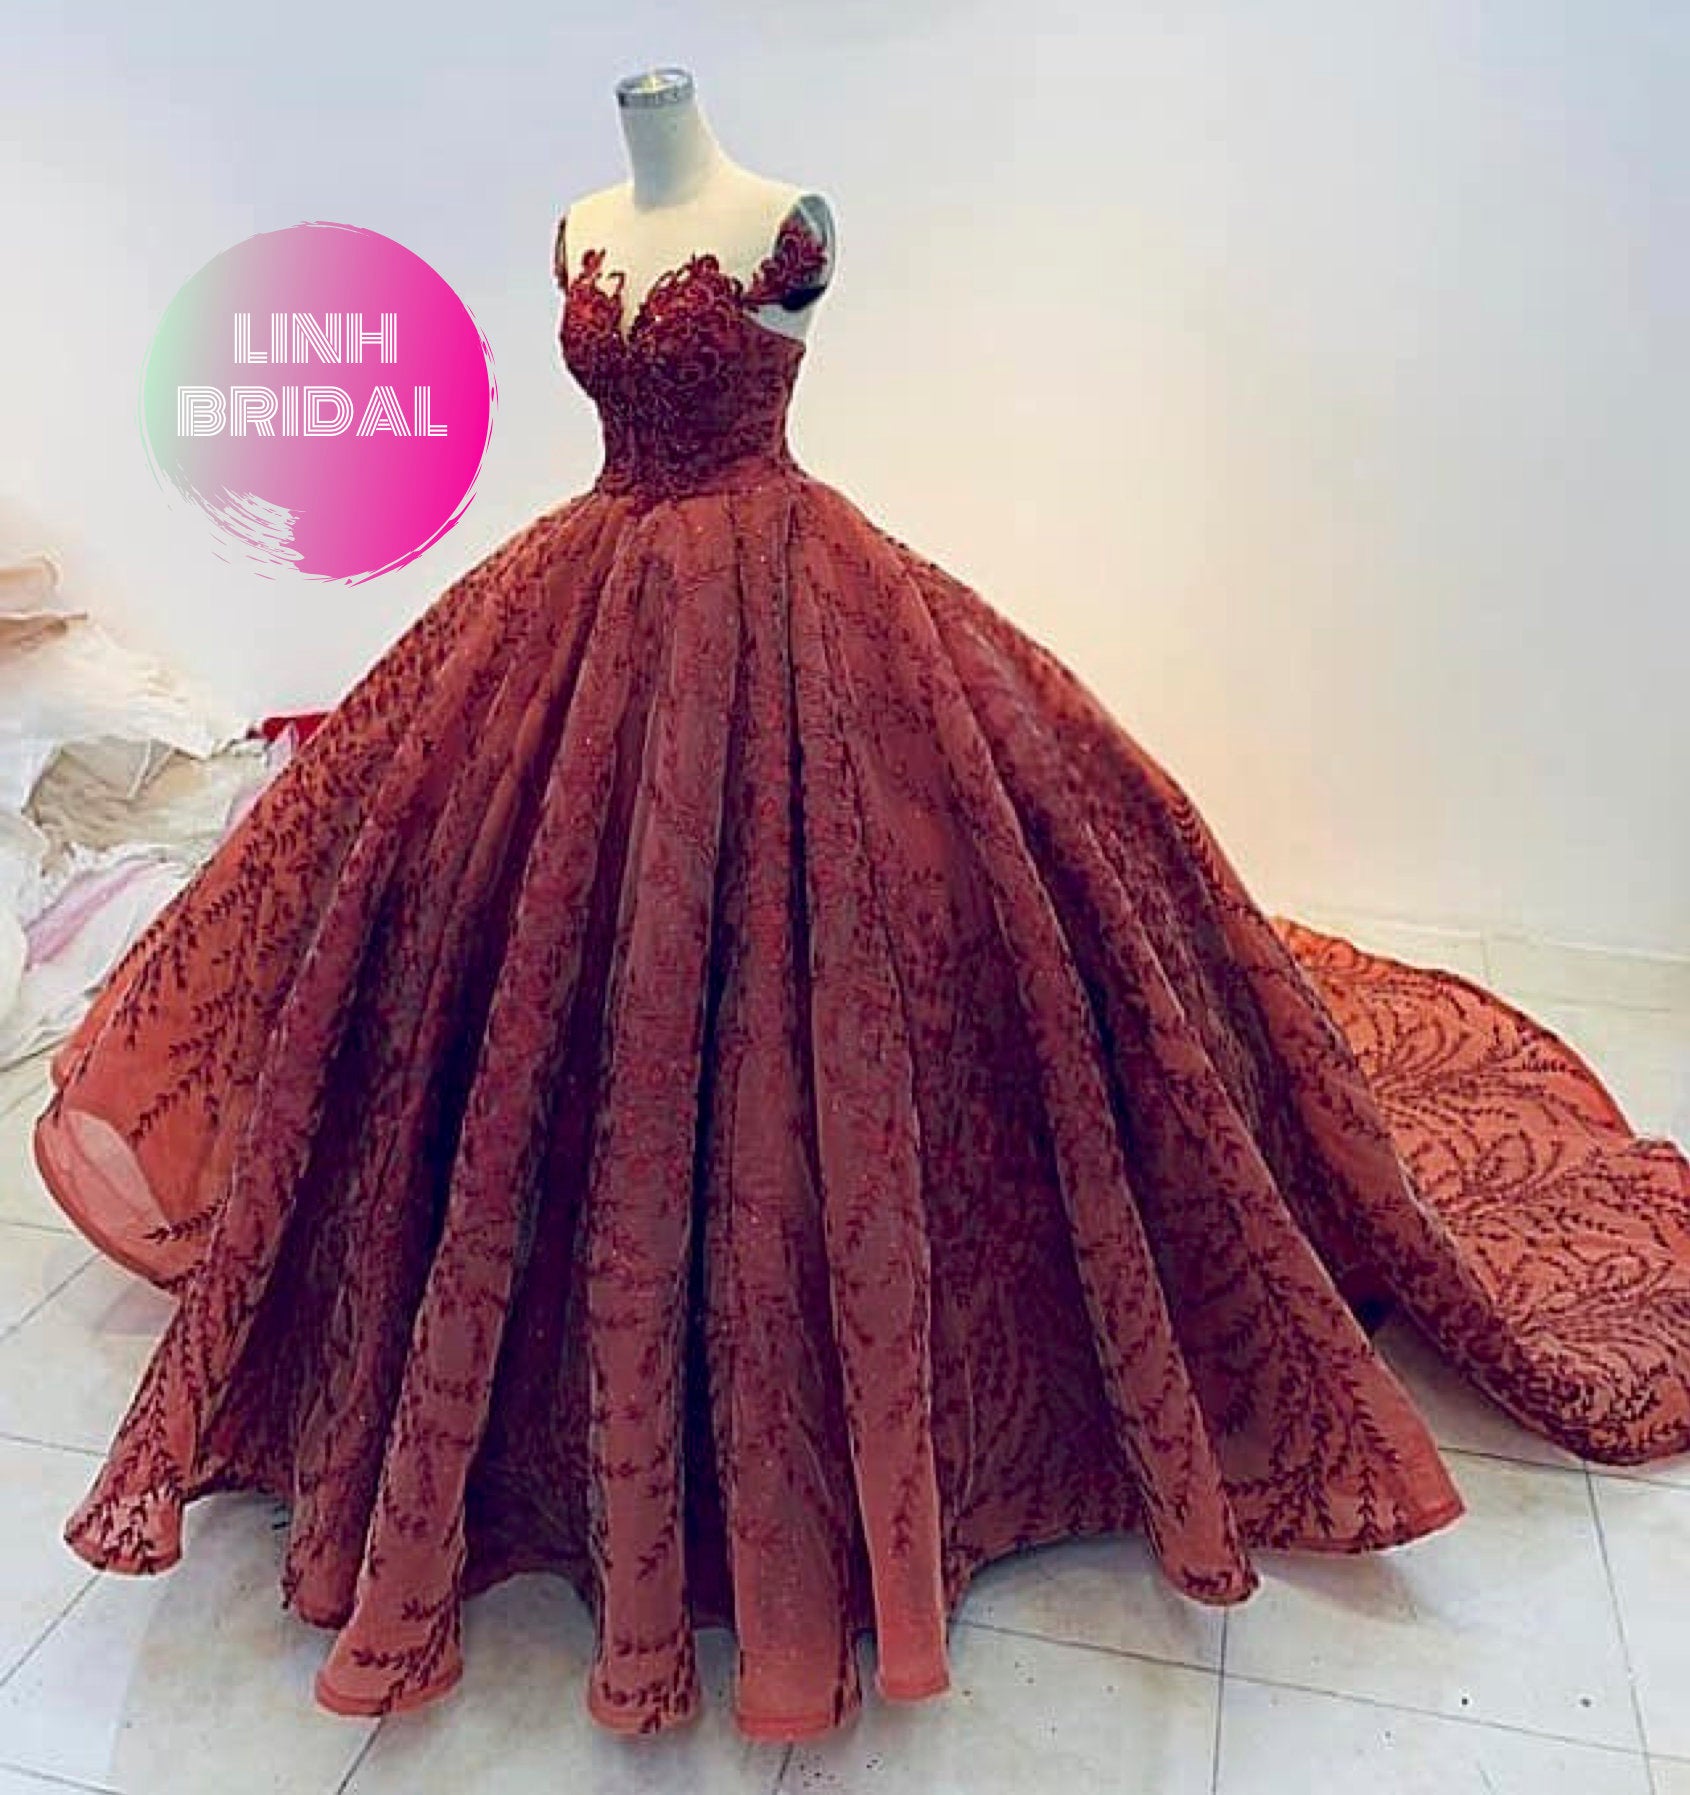 wedding gown maroon